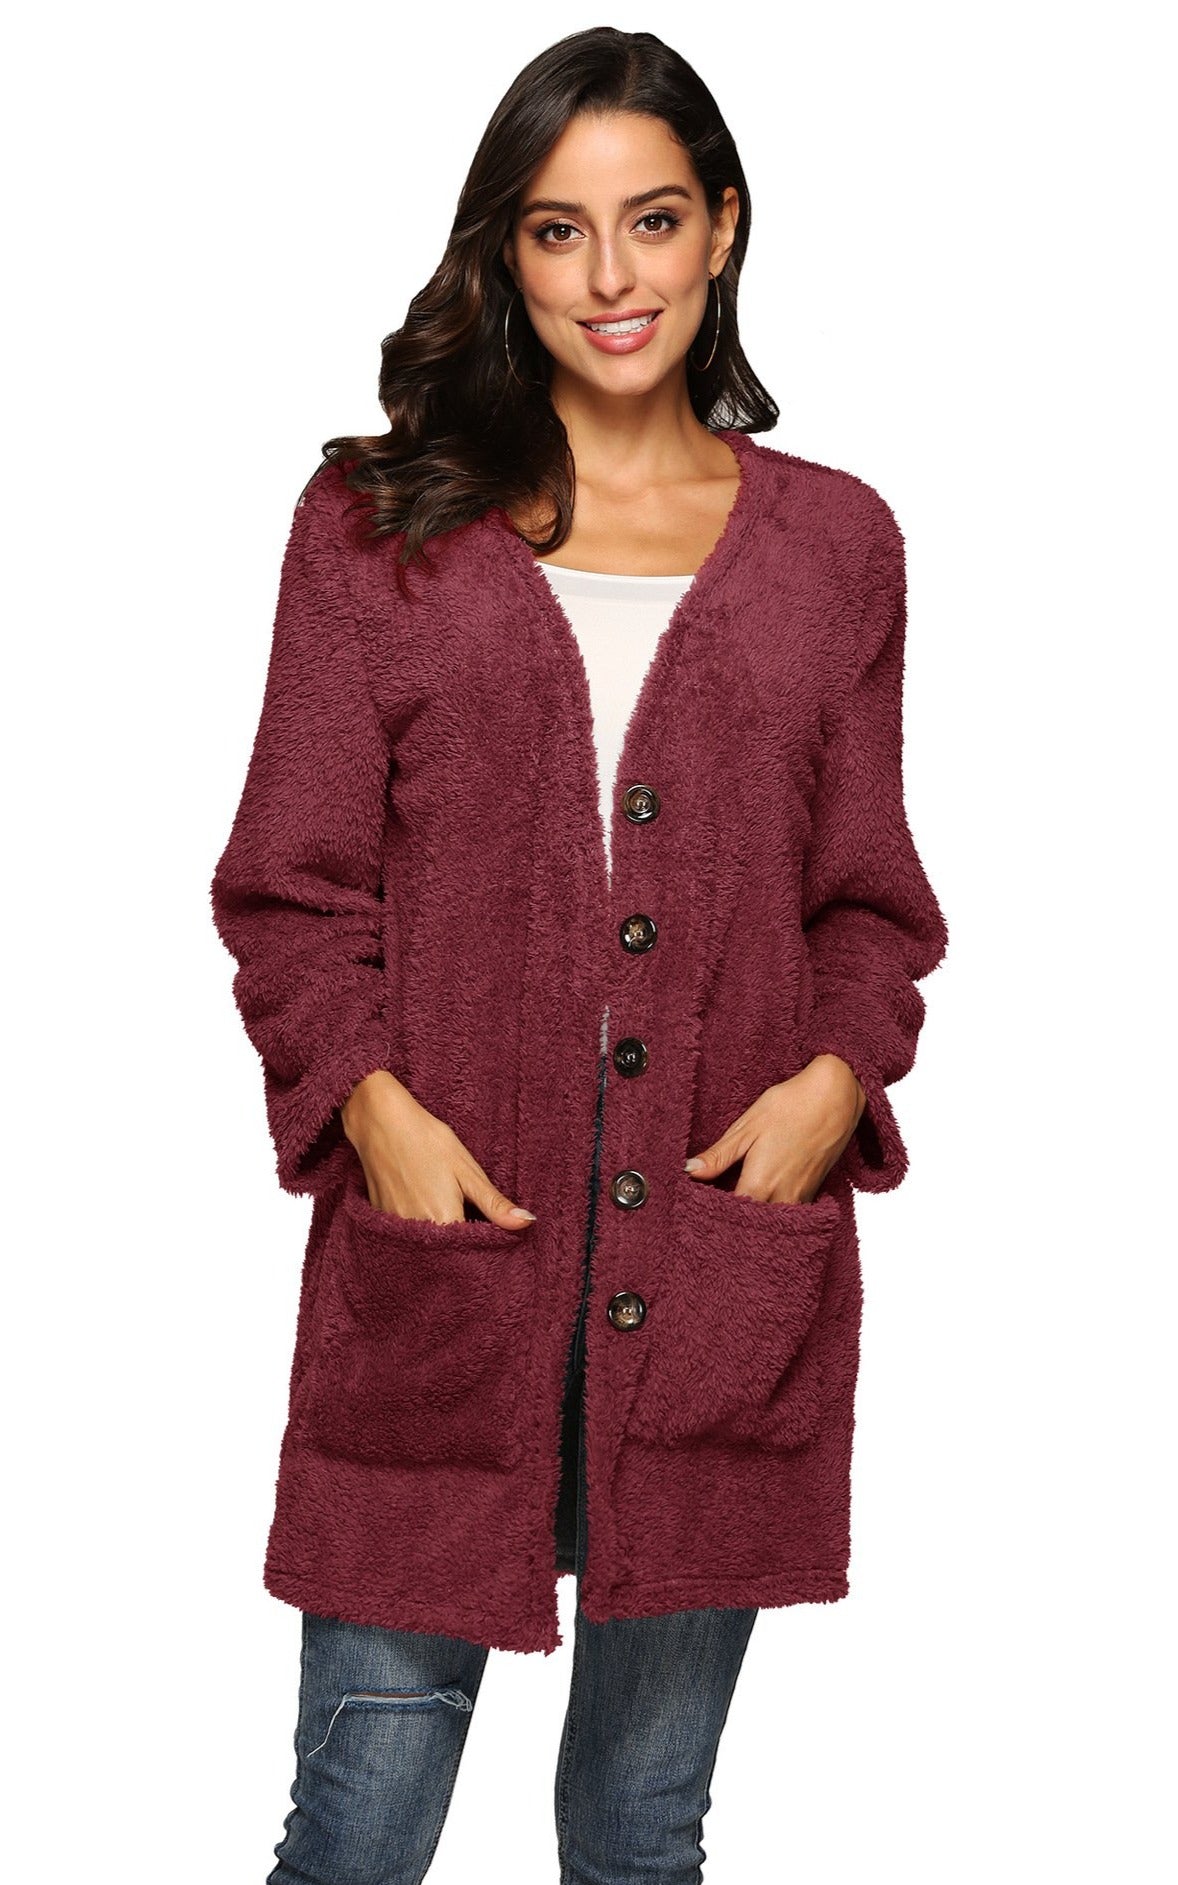 Woolen Coat Outerwear